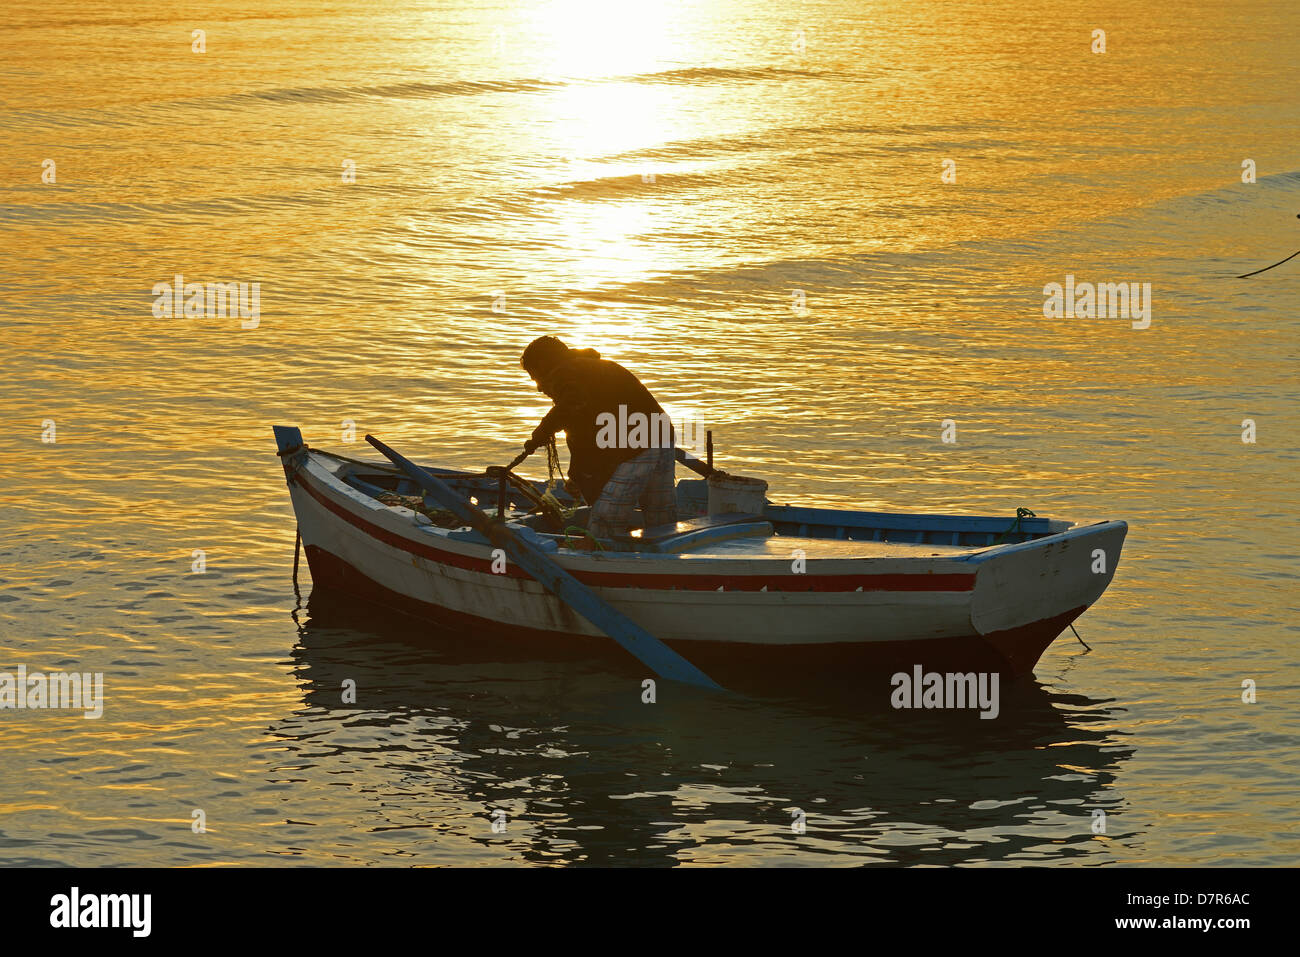 Boat at sunrise, Mediterranean, Zarzis, Tunisia. Stock Photo